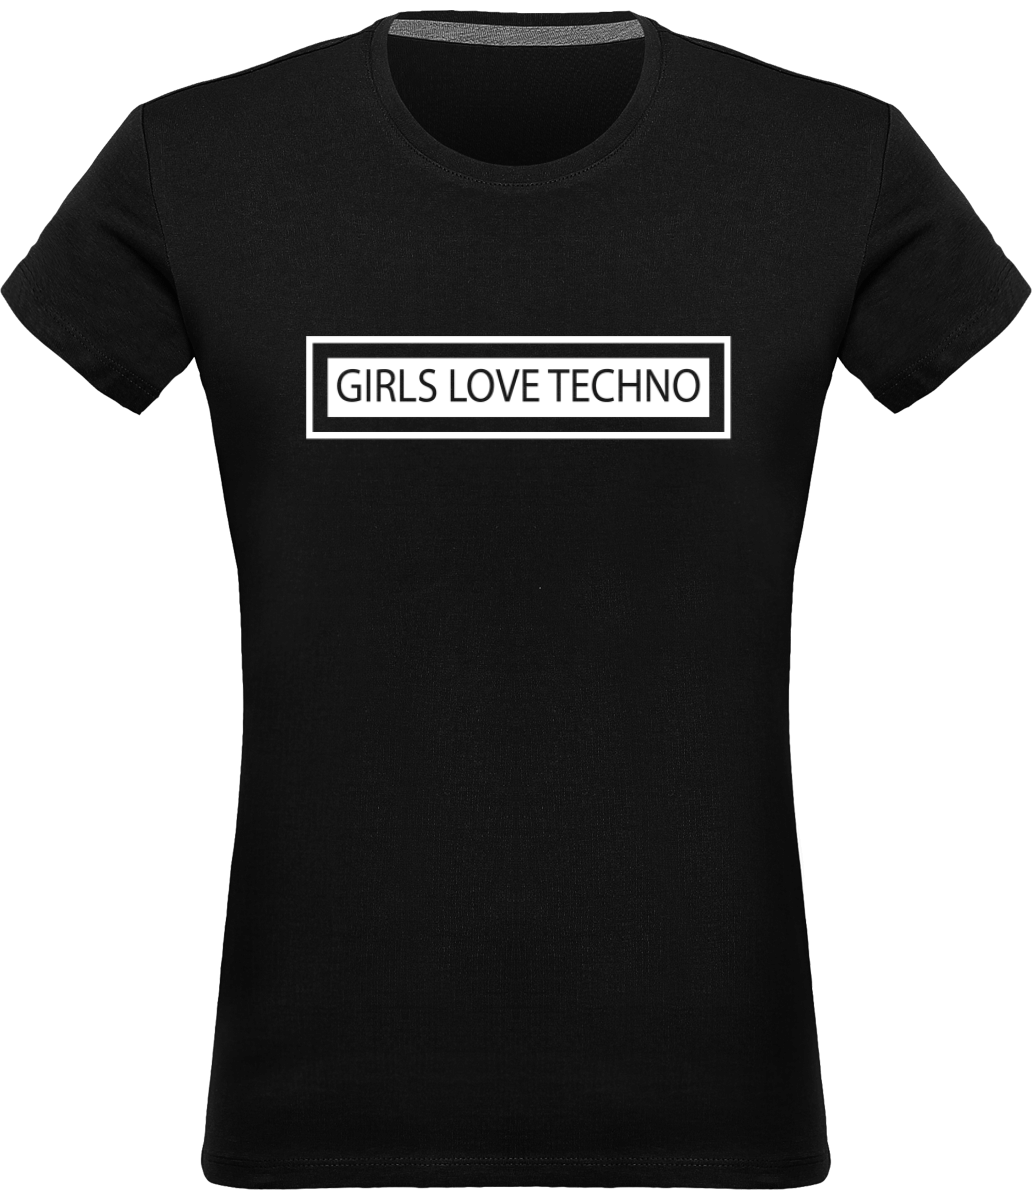 T-shirt "Girls Love Techno"